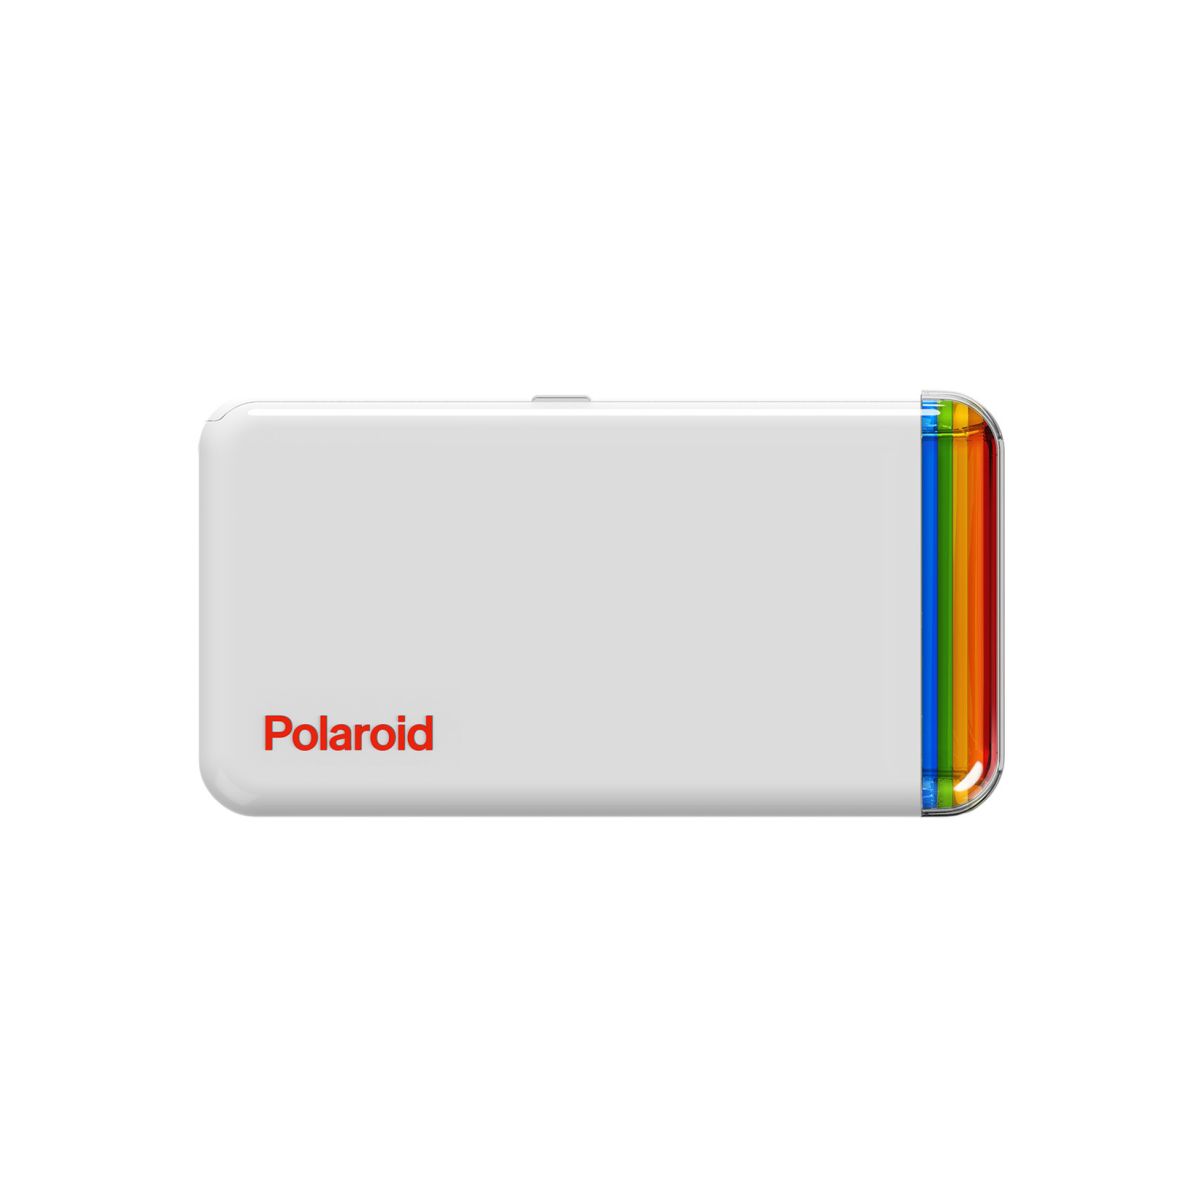 Polaroid HI Print 2x3 Pocket Printer White